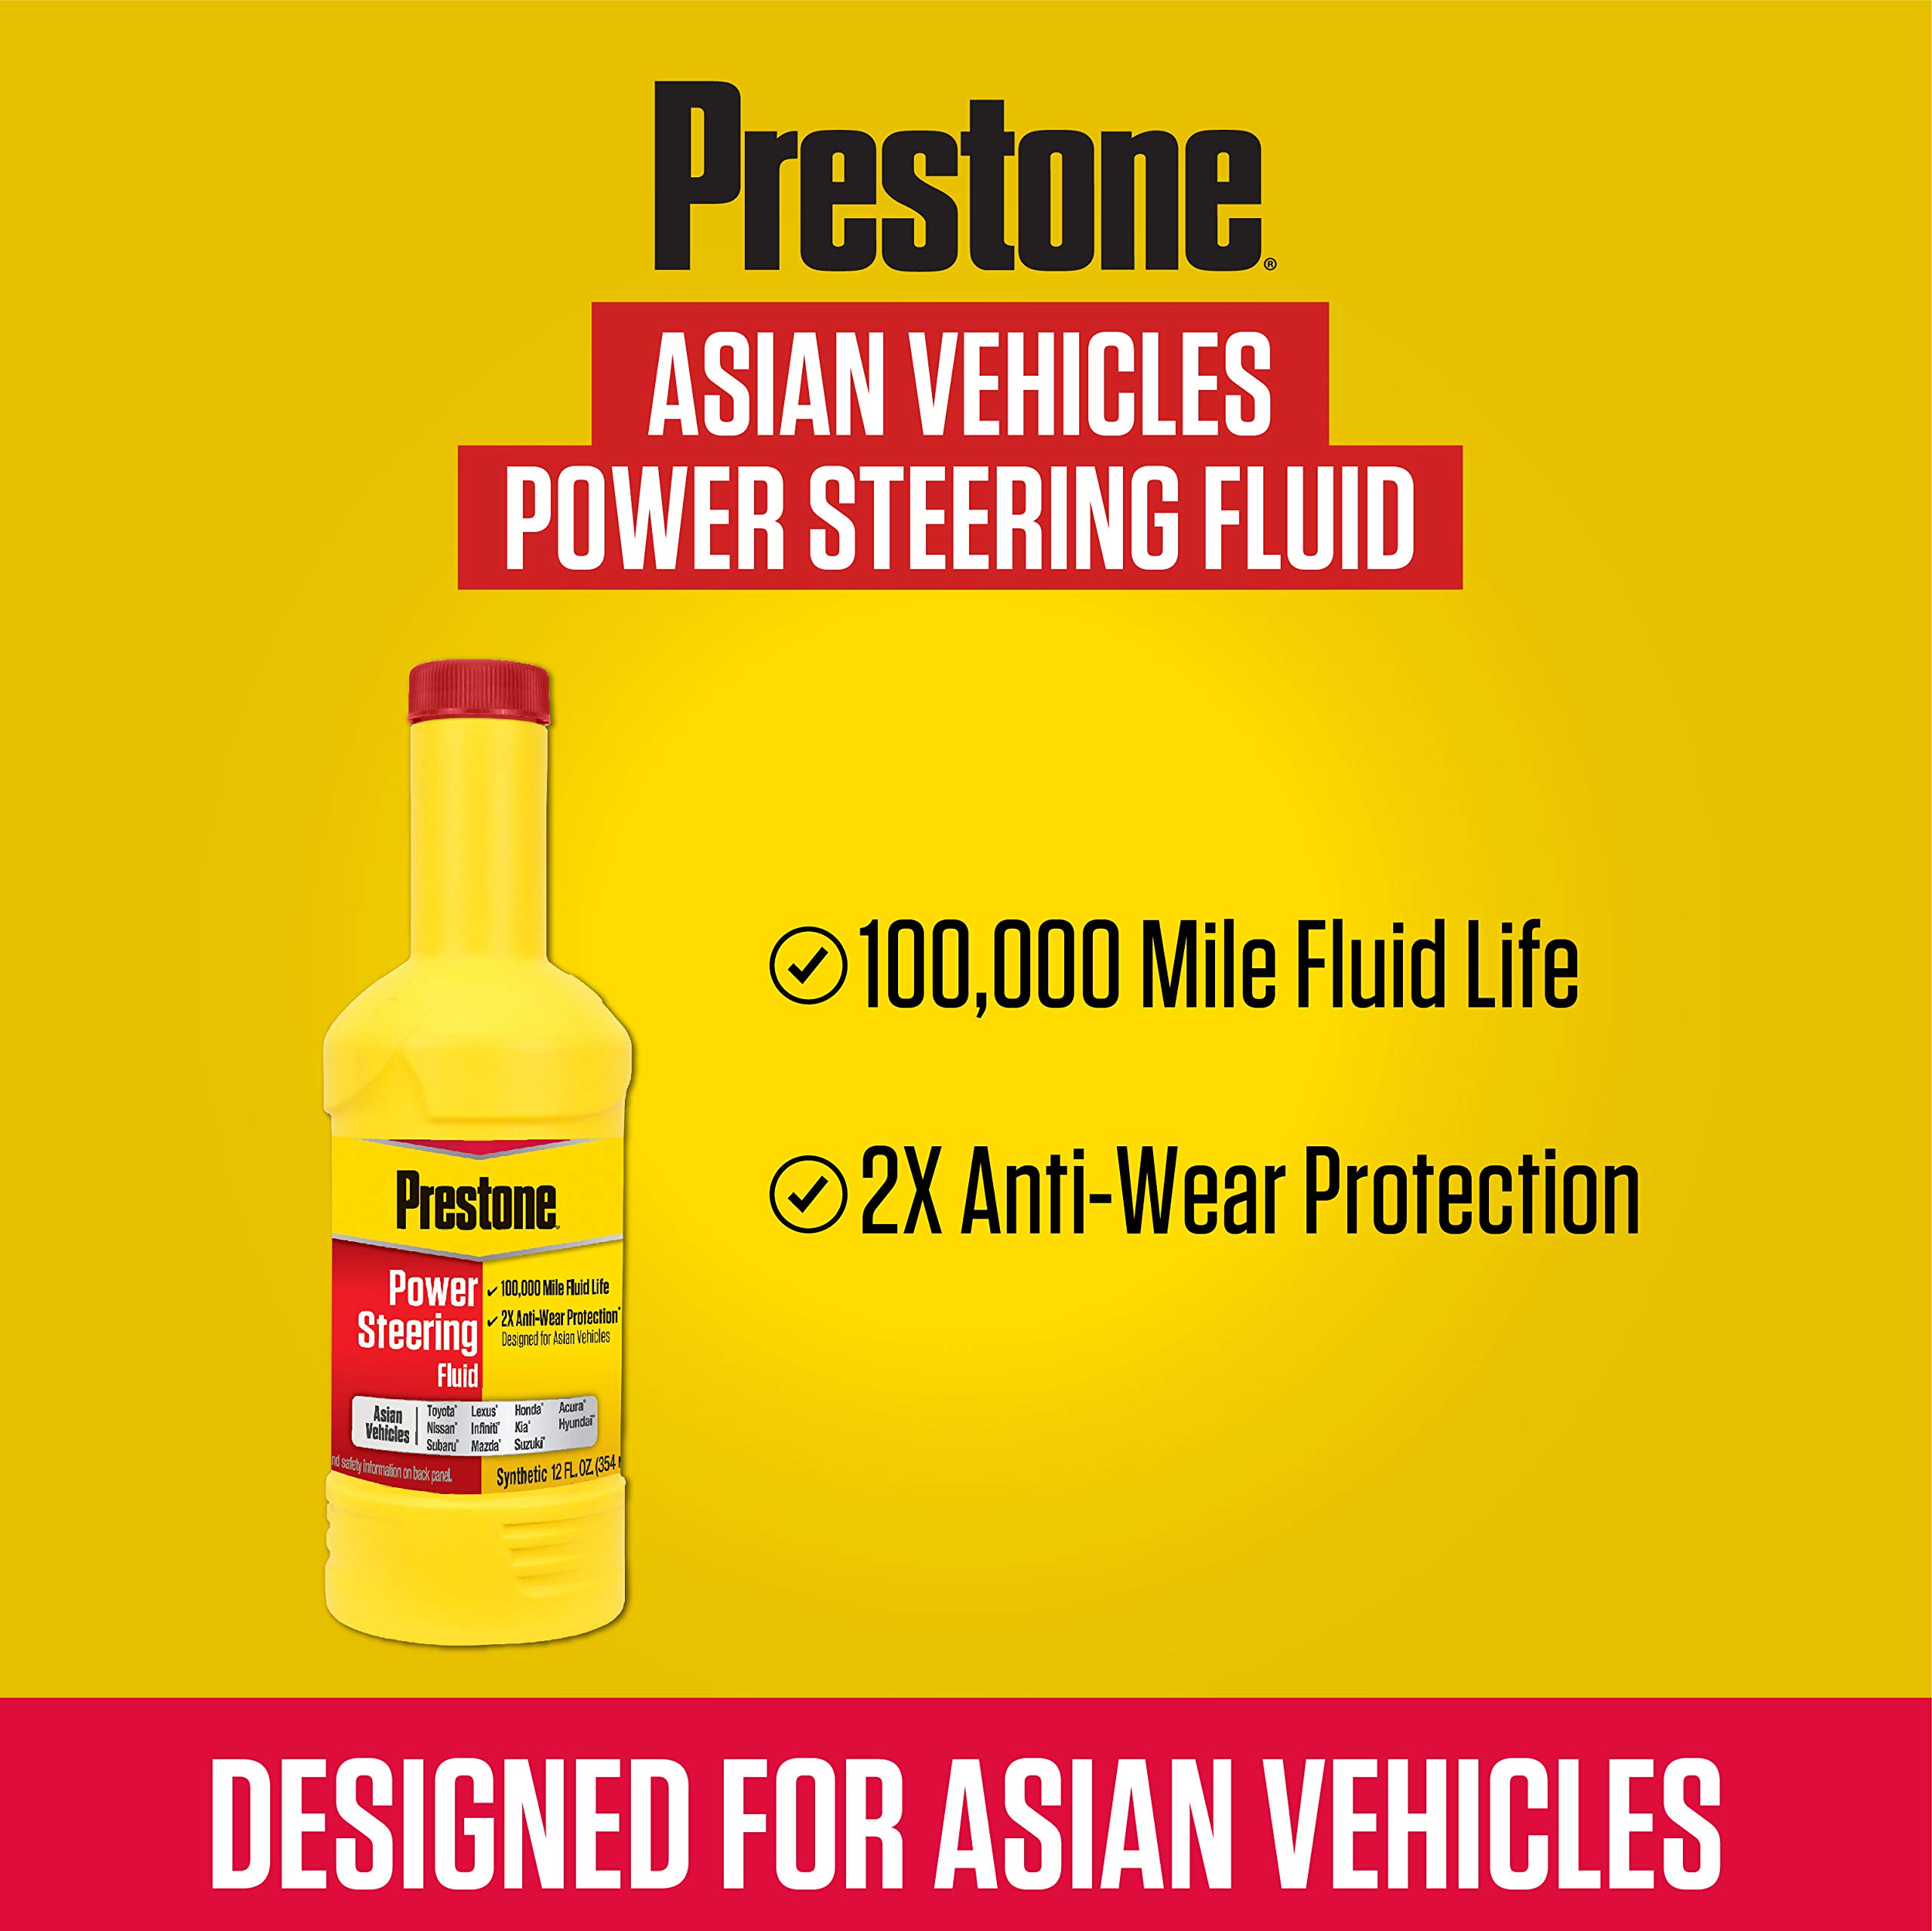 Prestone AS269 Power Steering Fluid for Asian Vehicles - 12 oz.